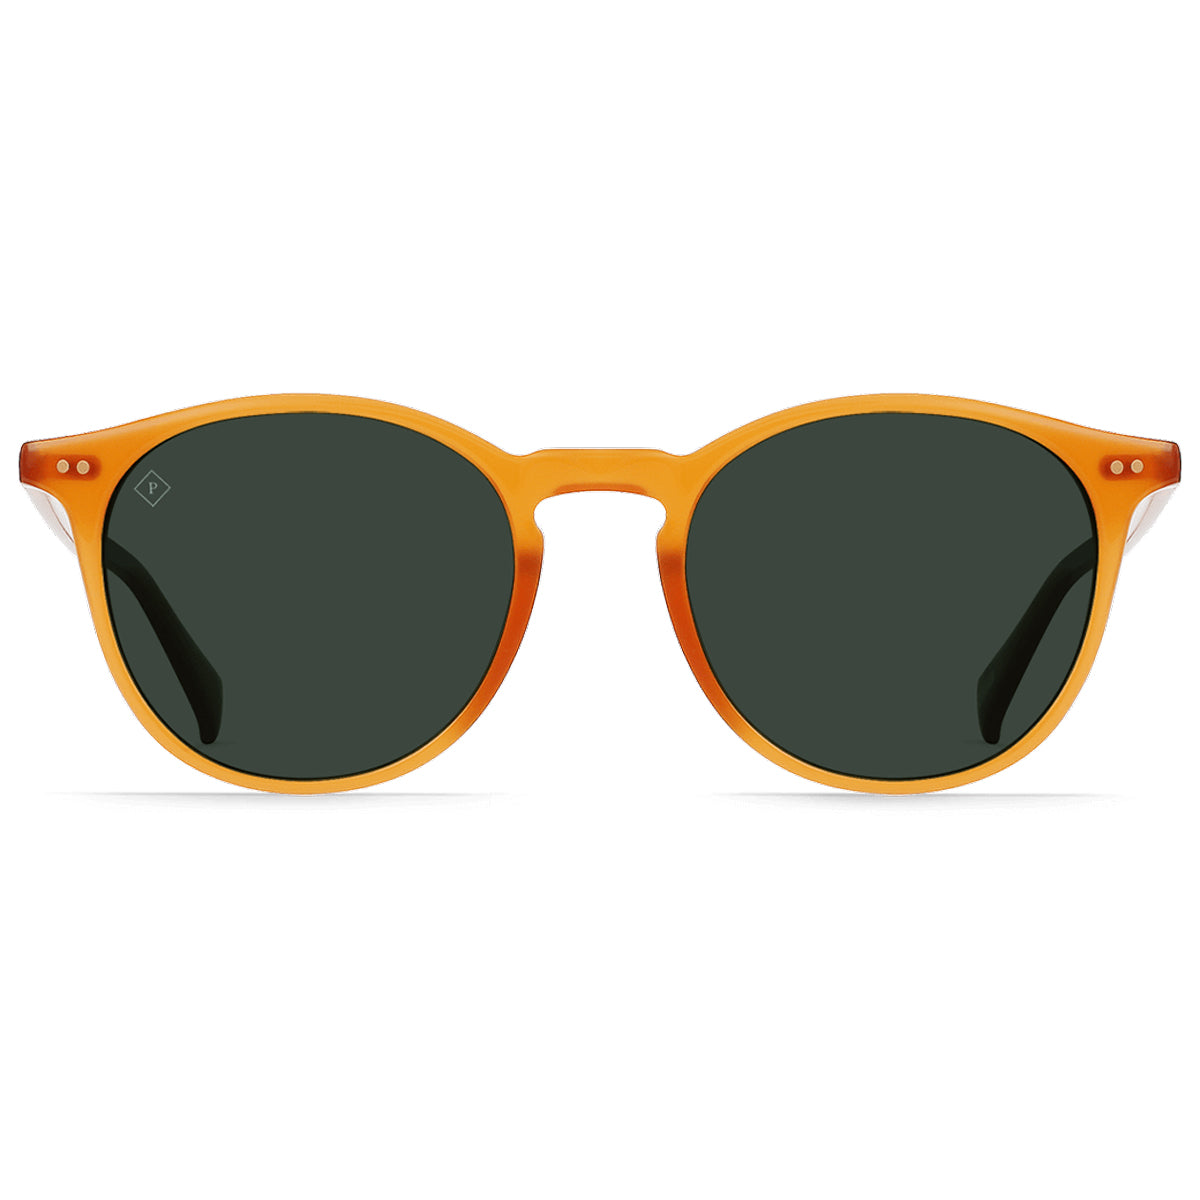 Raen Basq Sunglasses - Honey/Green Polarized - 50 image 2